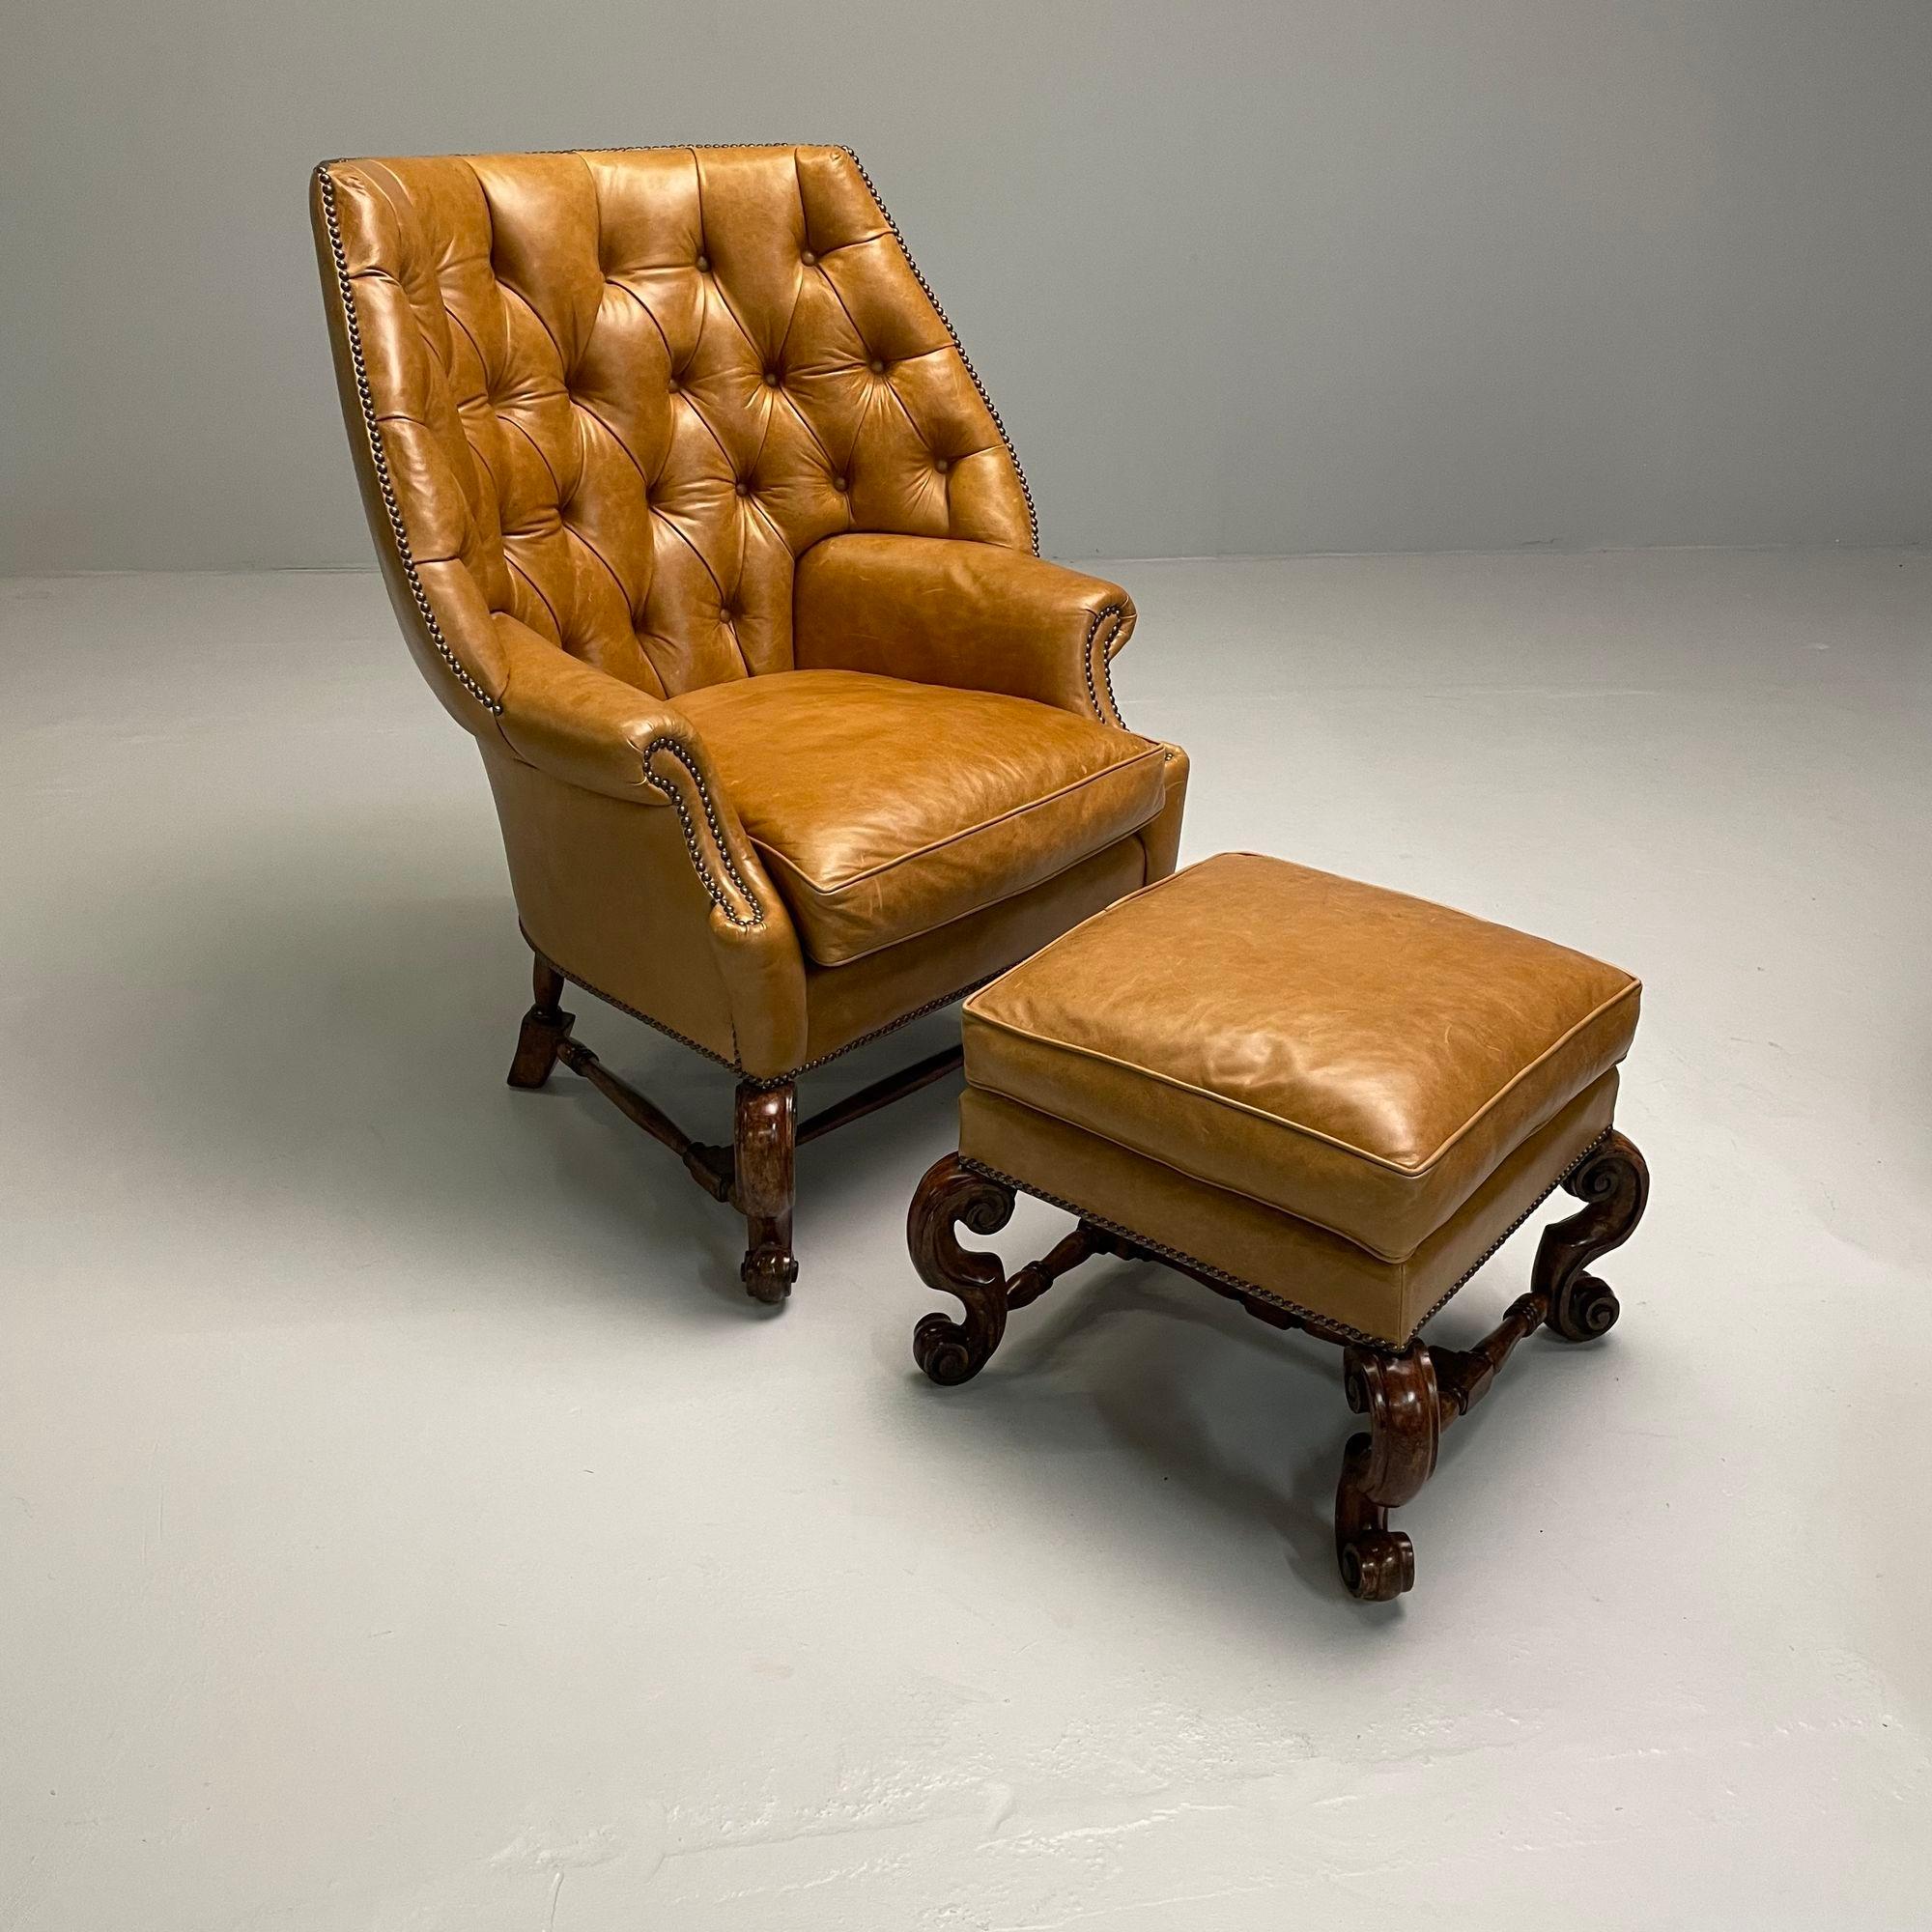 Contemporary Georgian, Cabriole Leg Ottomans, Tan Leather, Wood, USA, 2000s For Sale